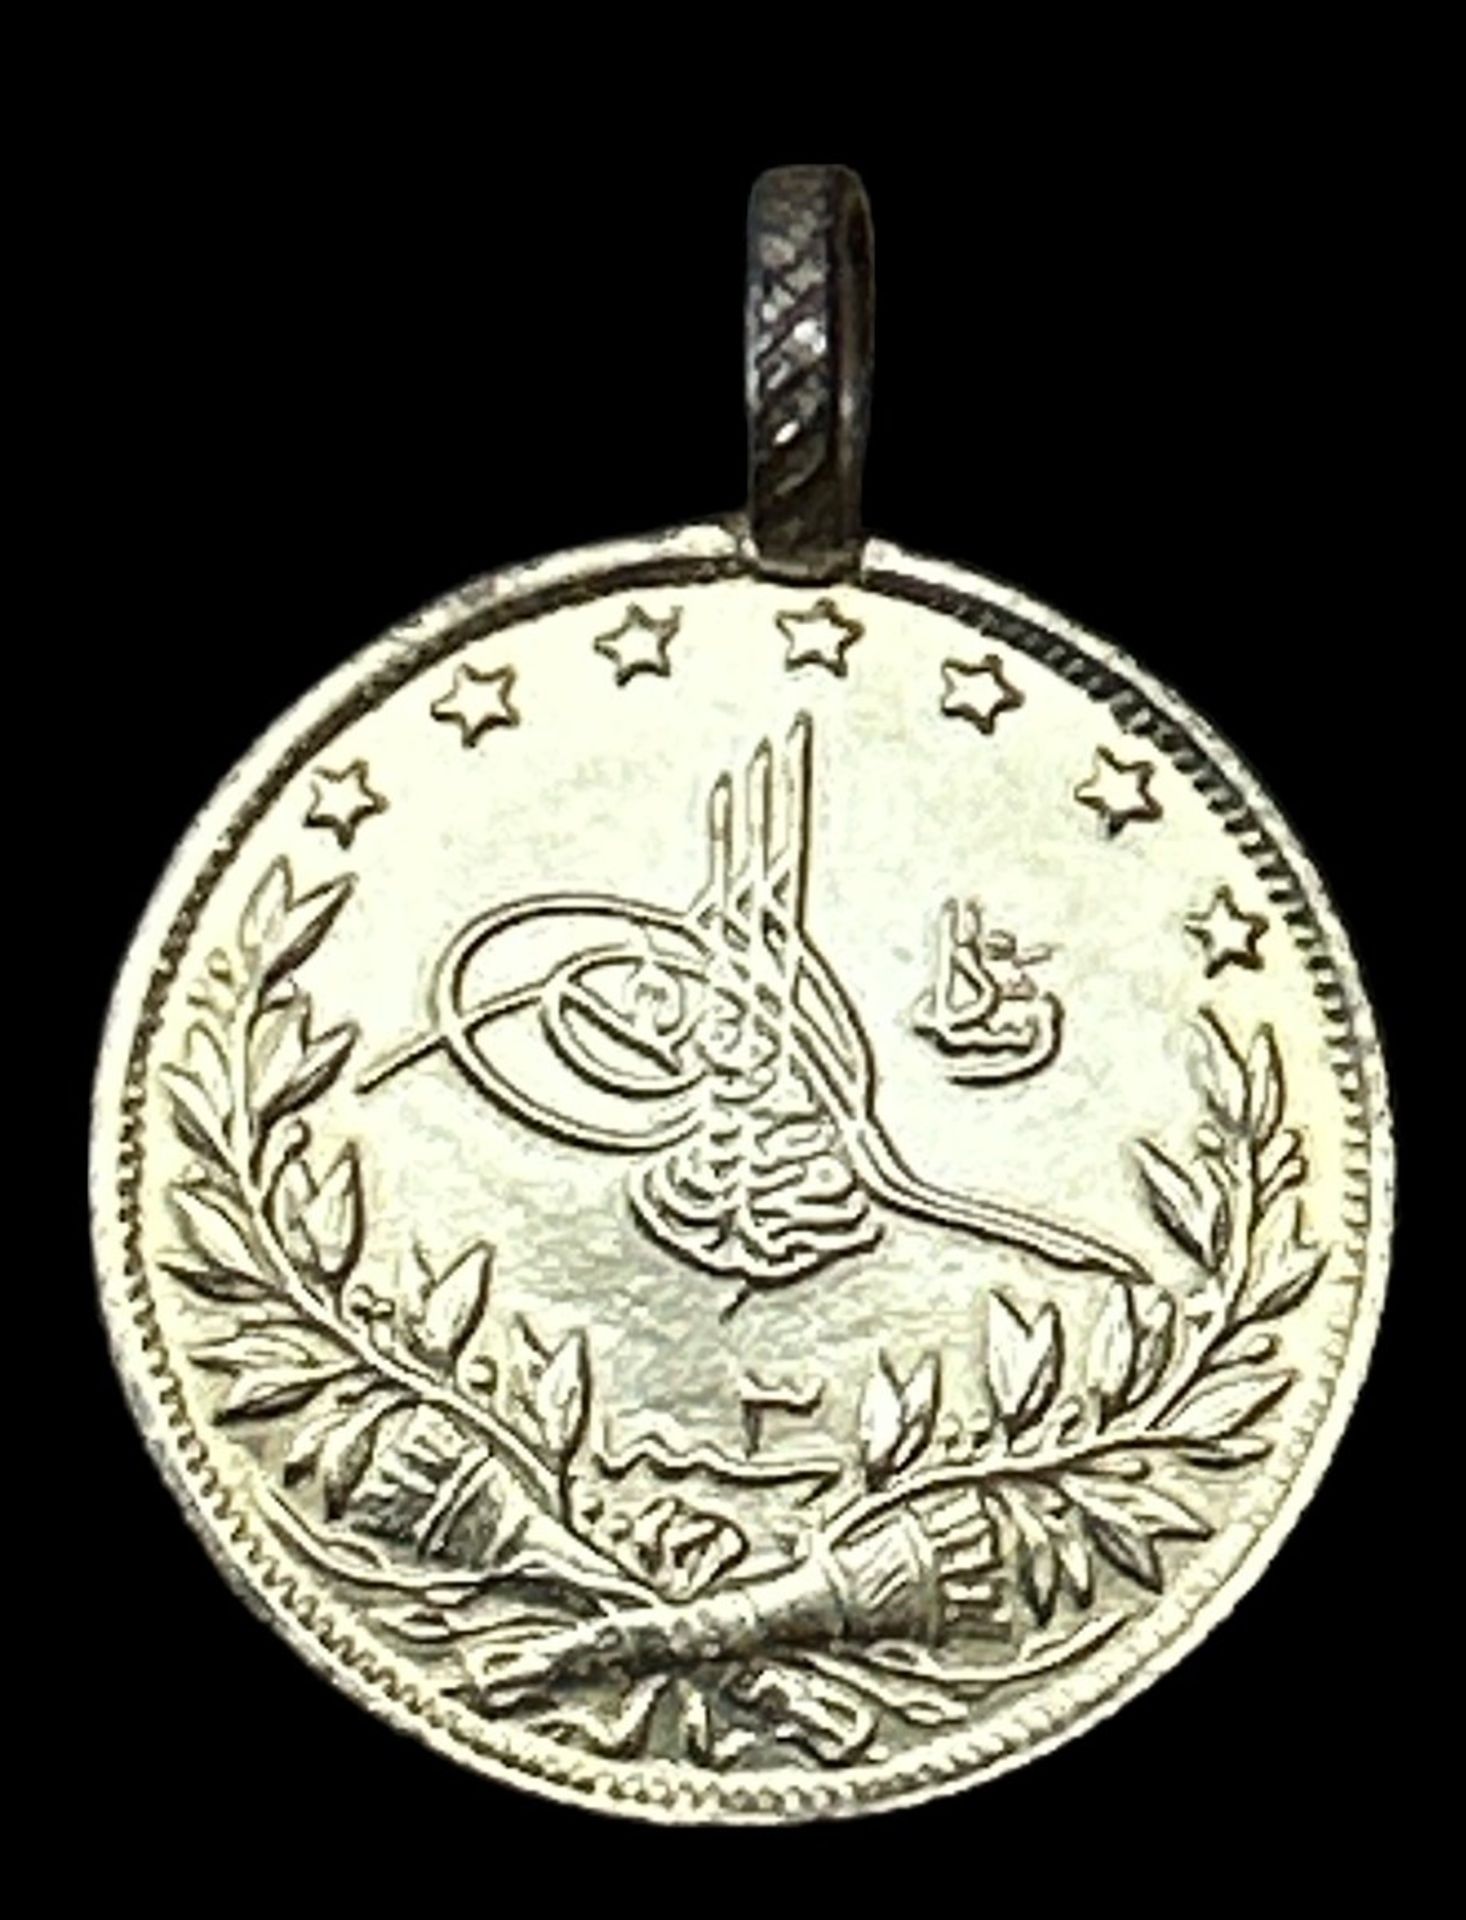 Münzanhänger Gold-916-, 100 Piaster, Türkei, gehenkelt, Öse unechtes Material, zus. 7,4 gr. D-ca. 2 - Image 3 of 5